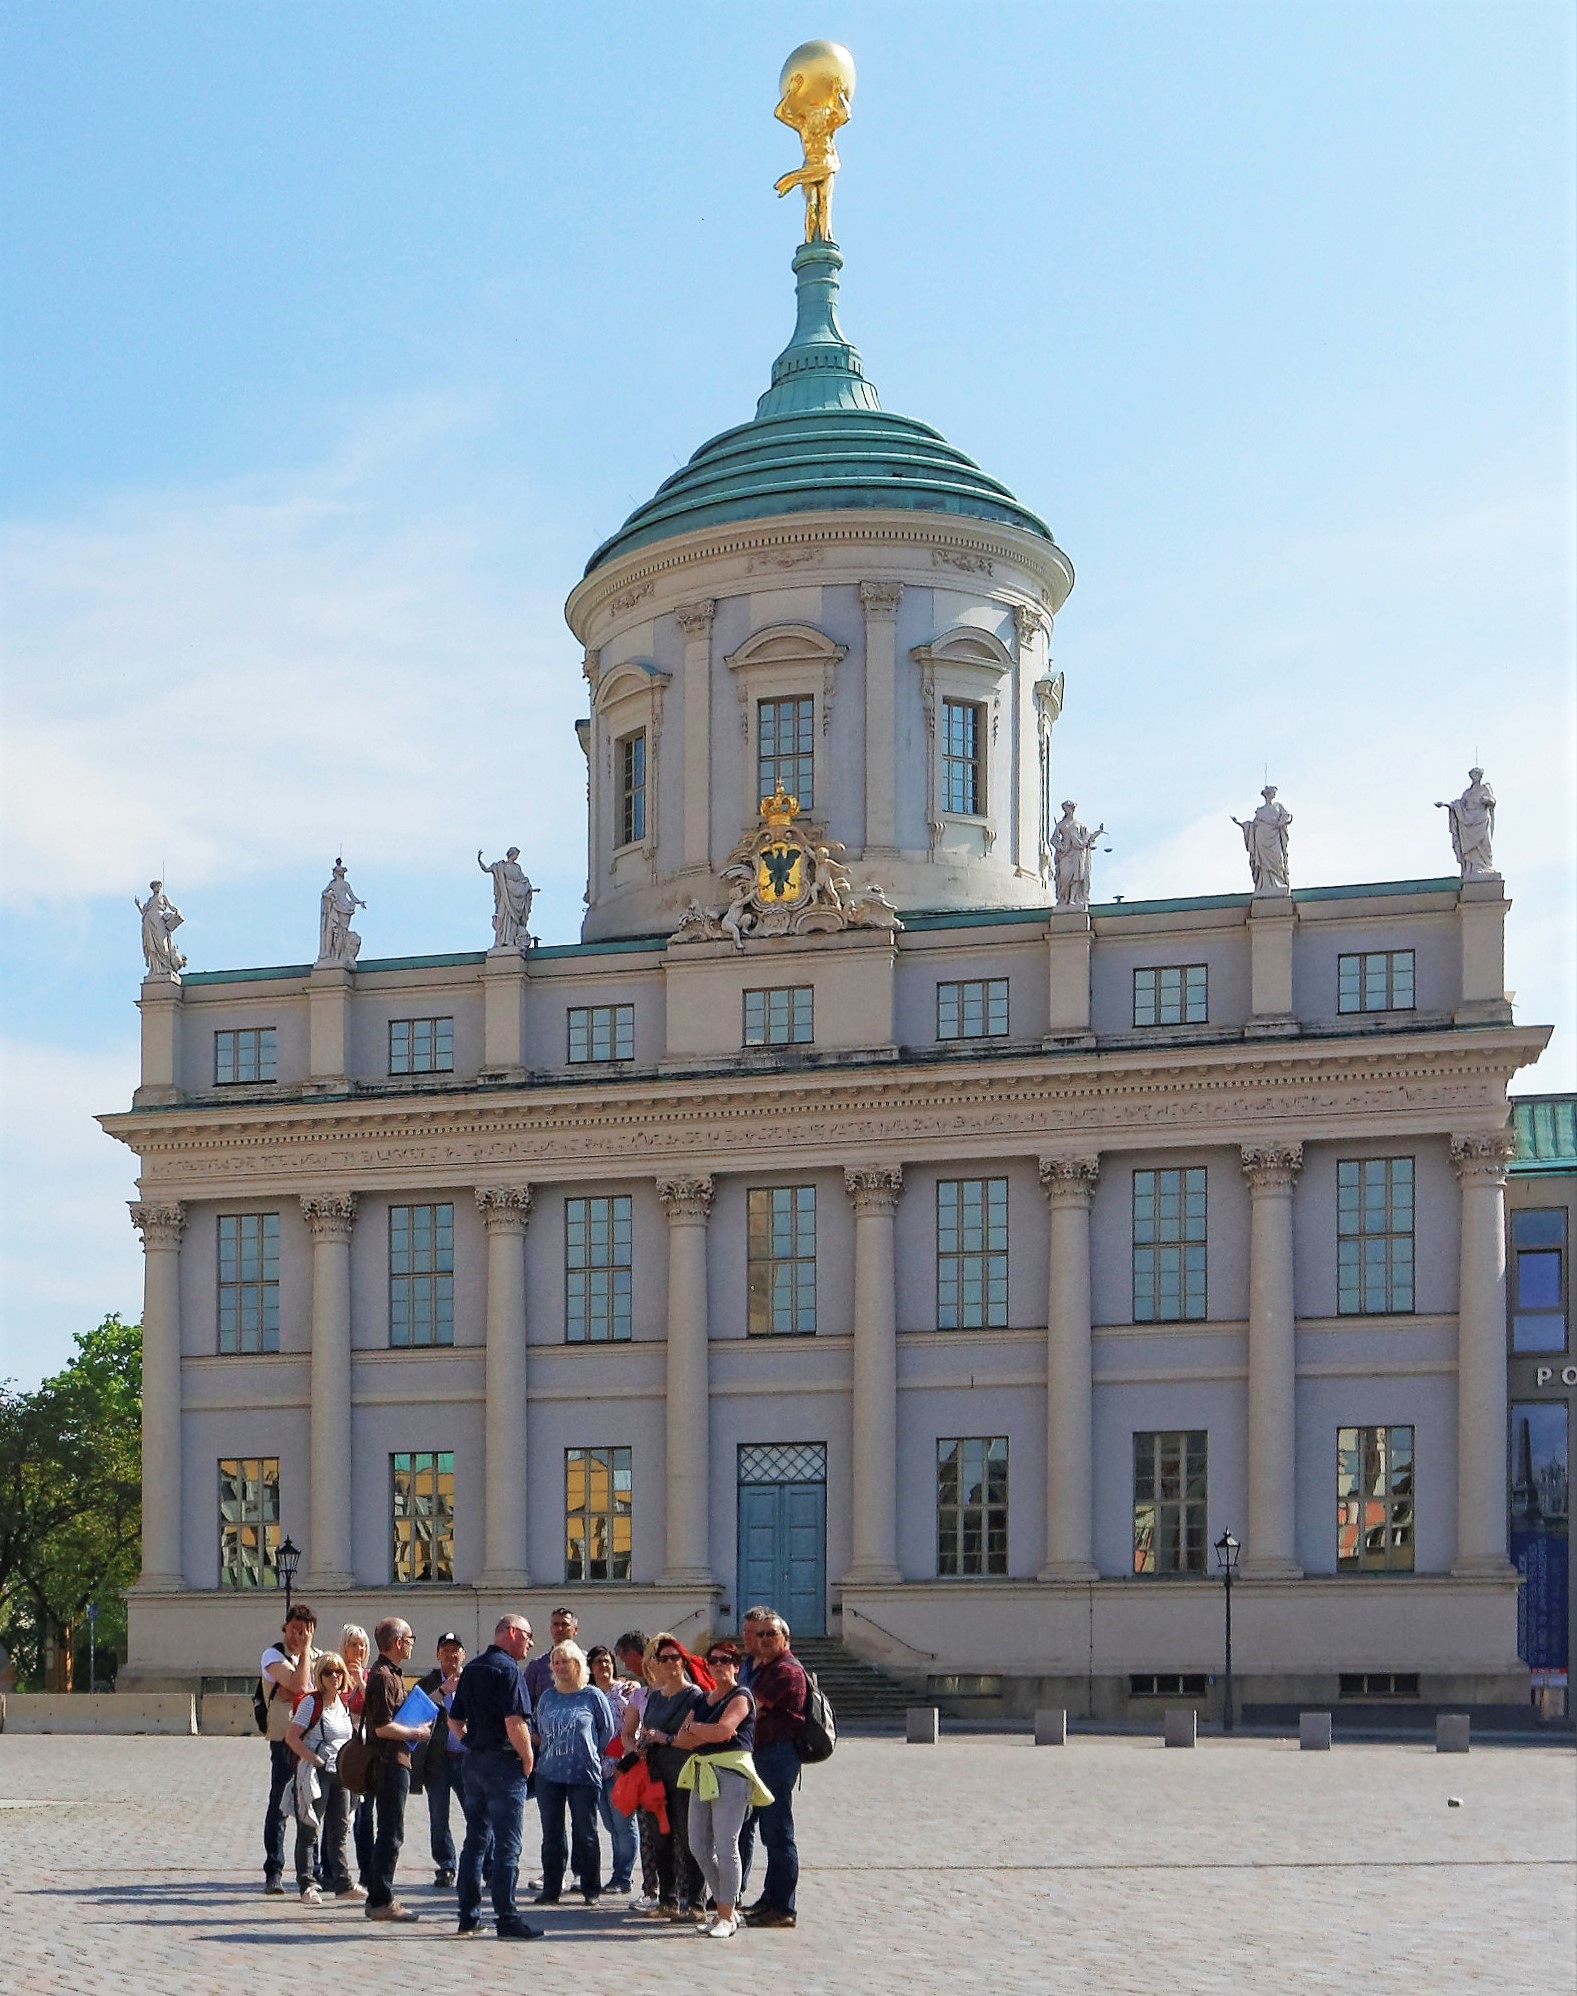 Potsdam kennenlernen